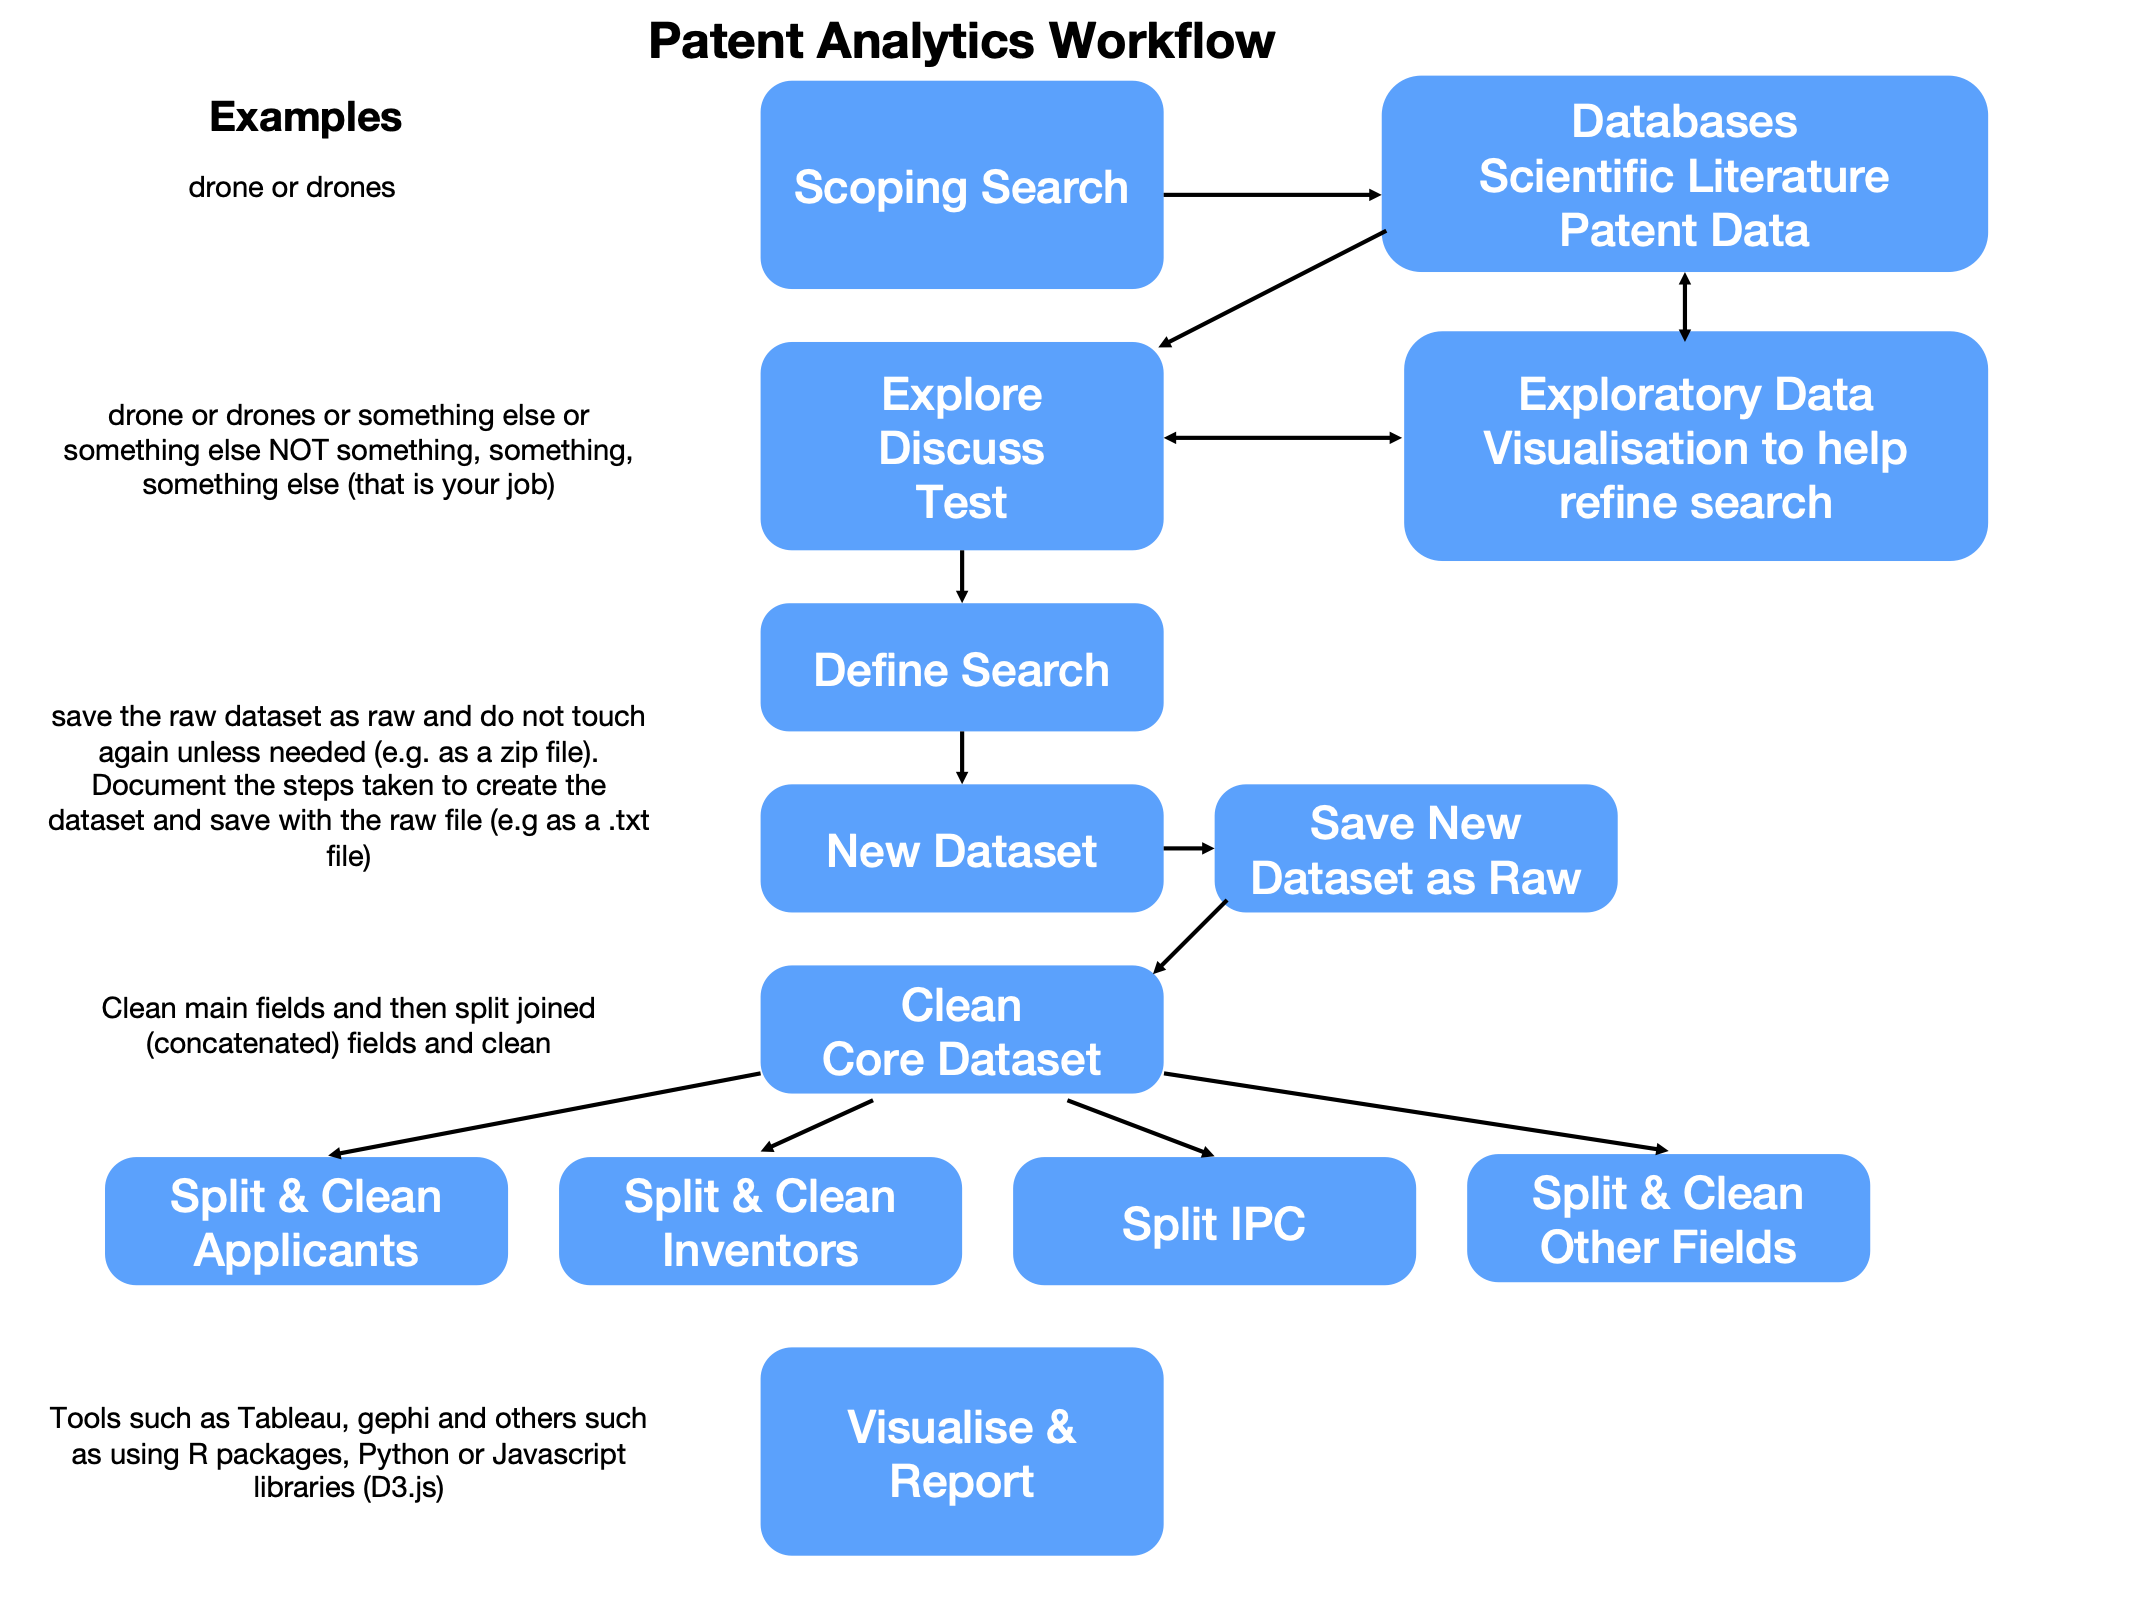 The Patent Analytics Workflow